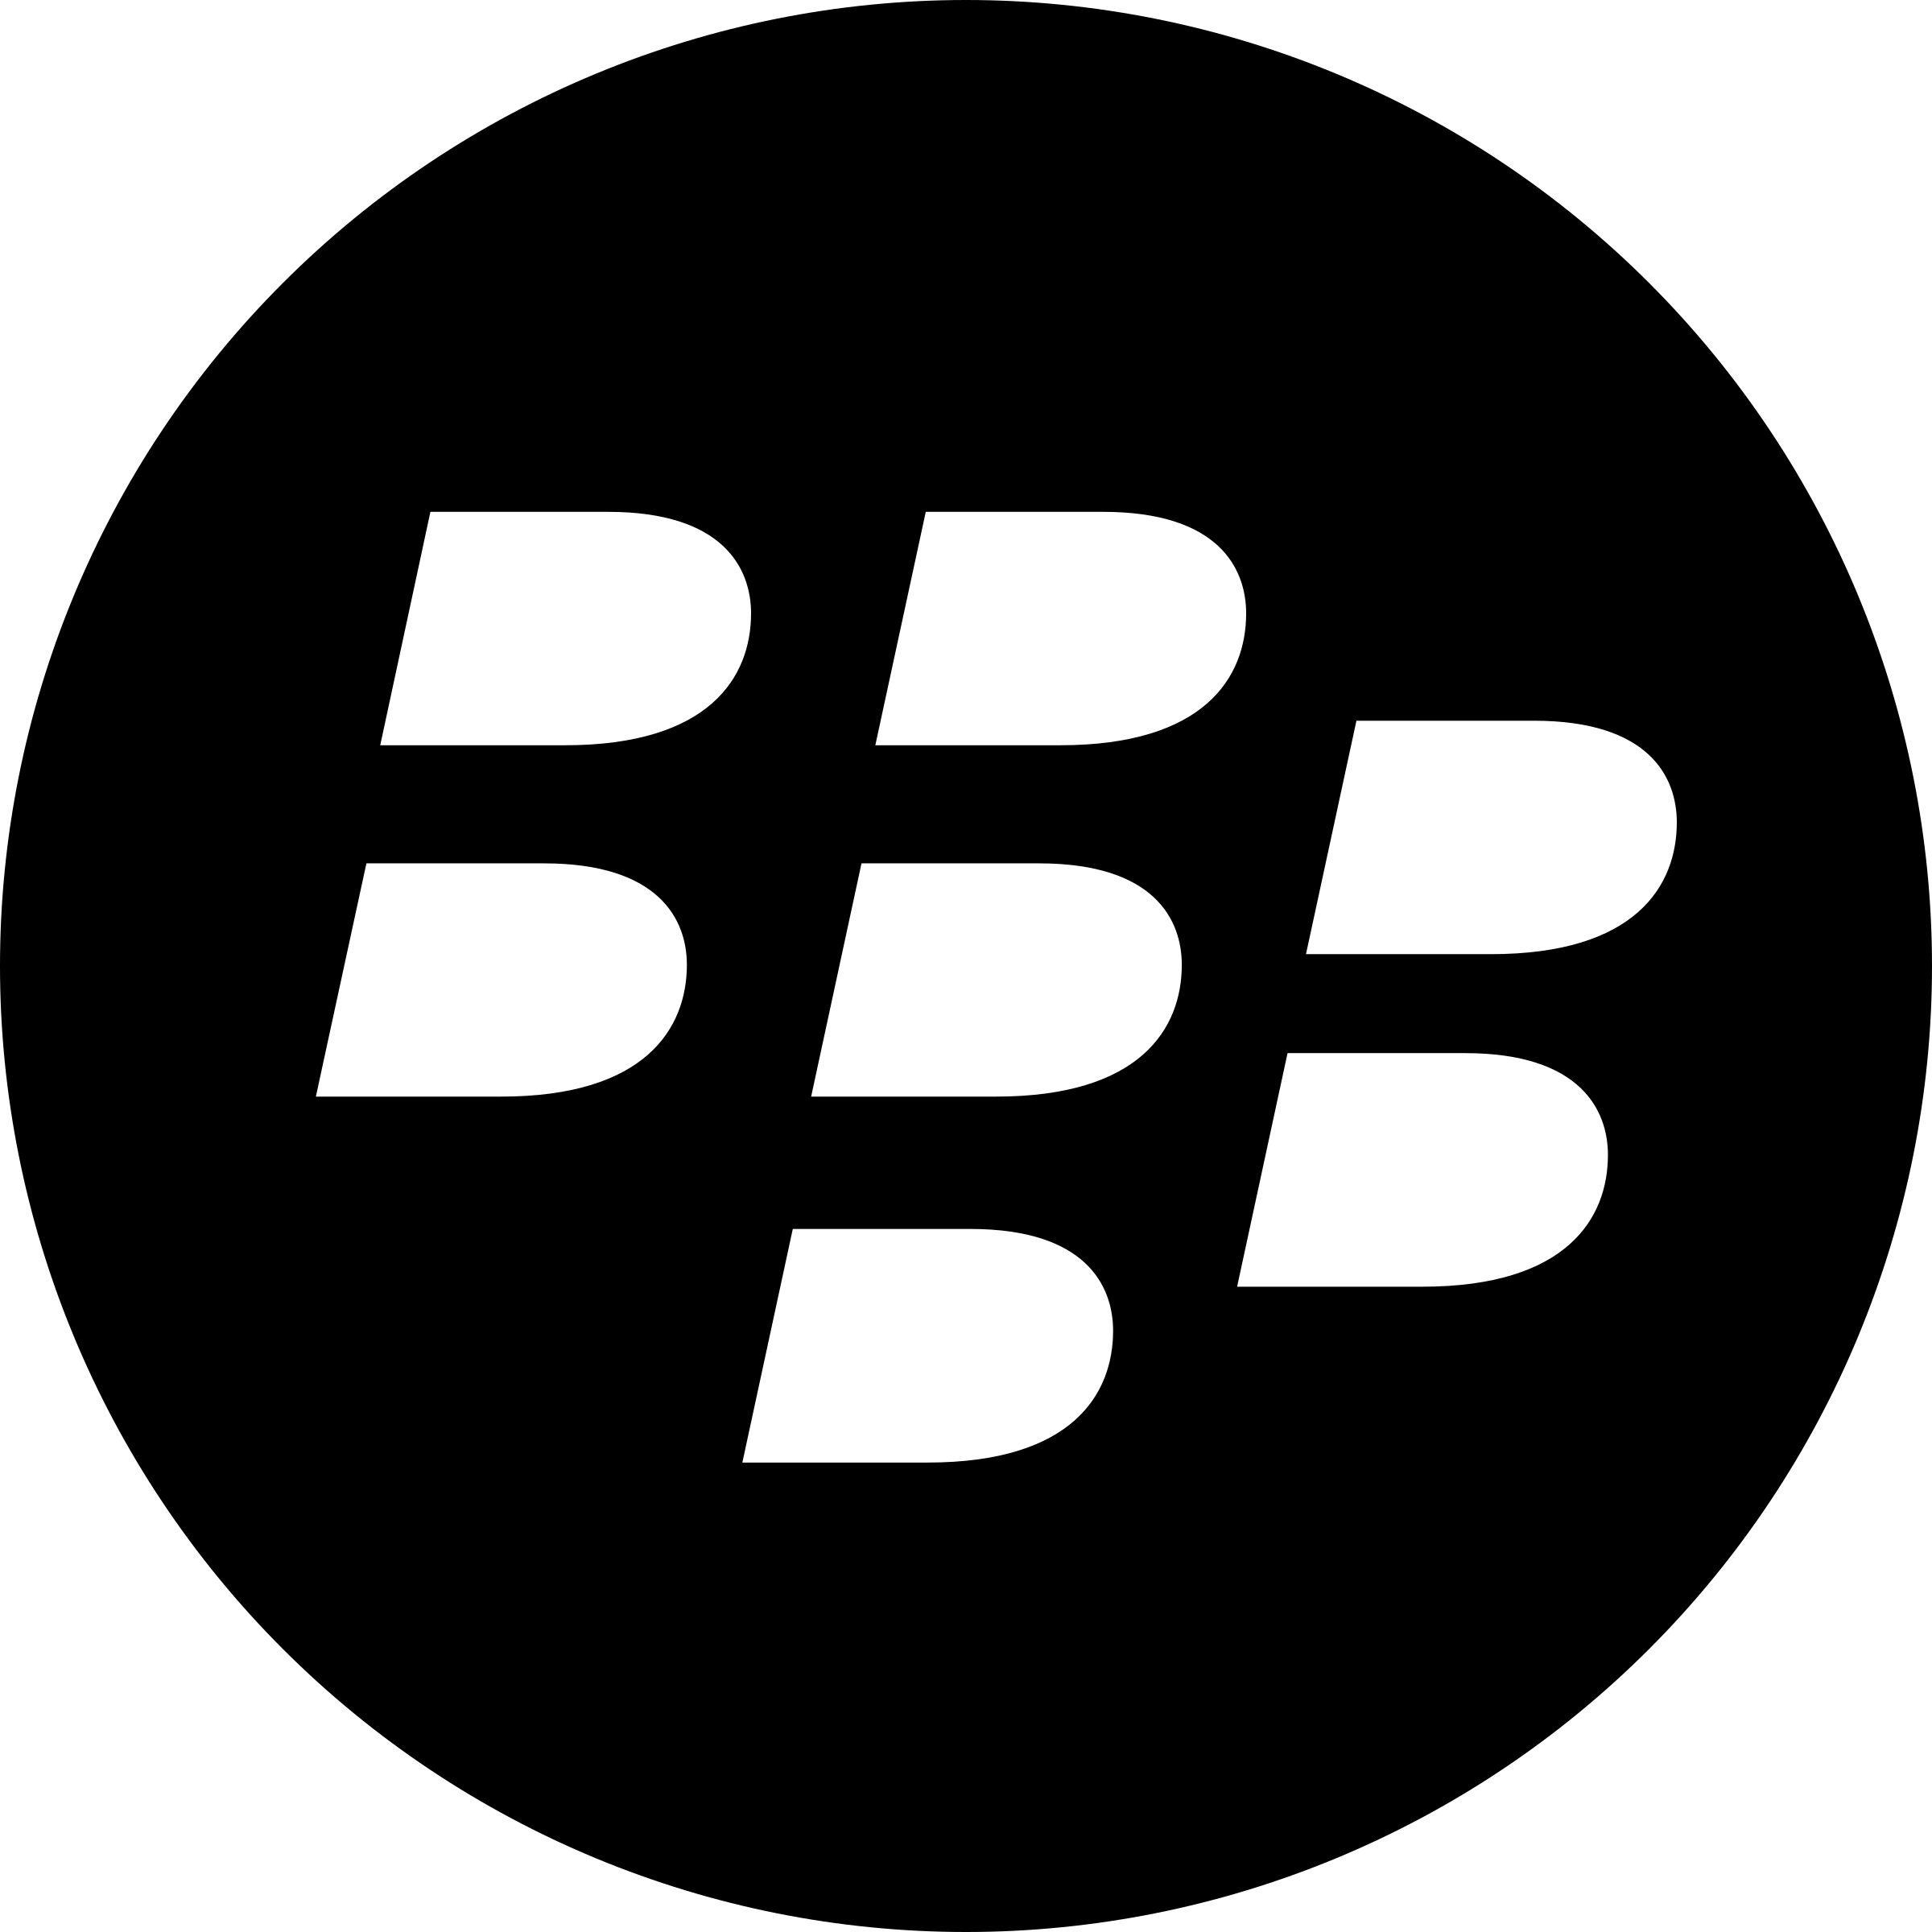 Blackberry Logo PNG - 175942